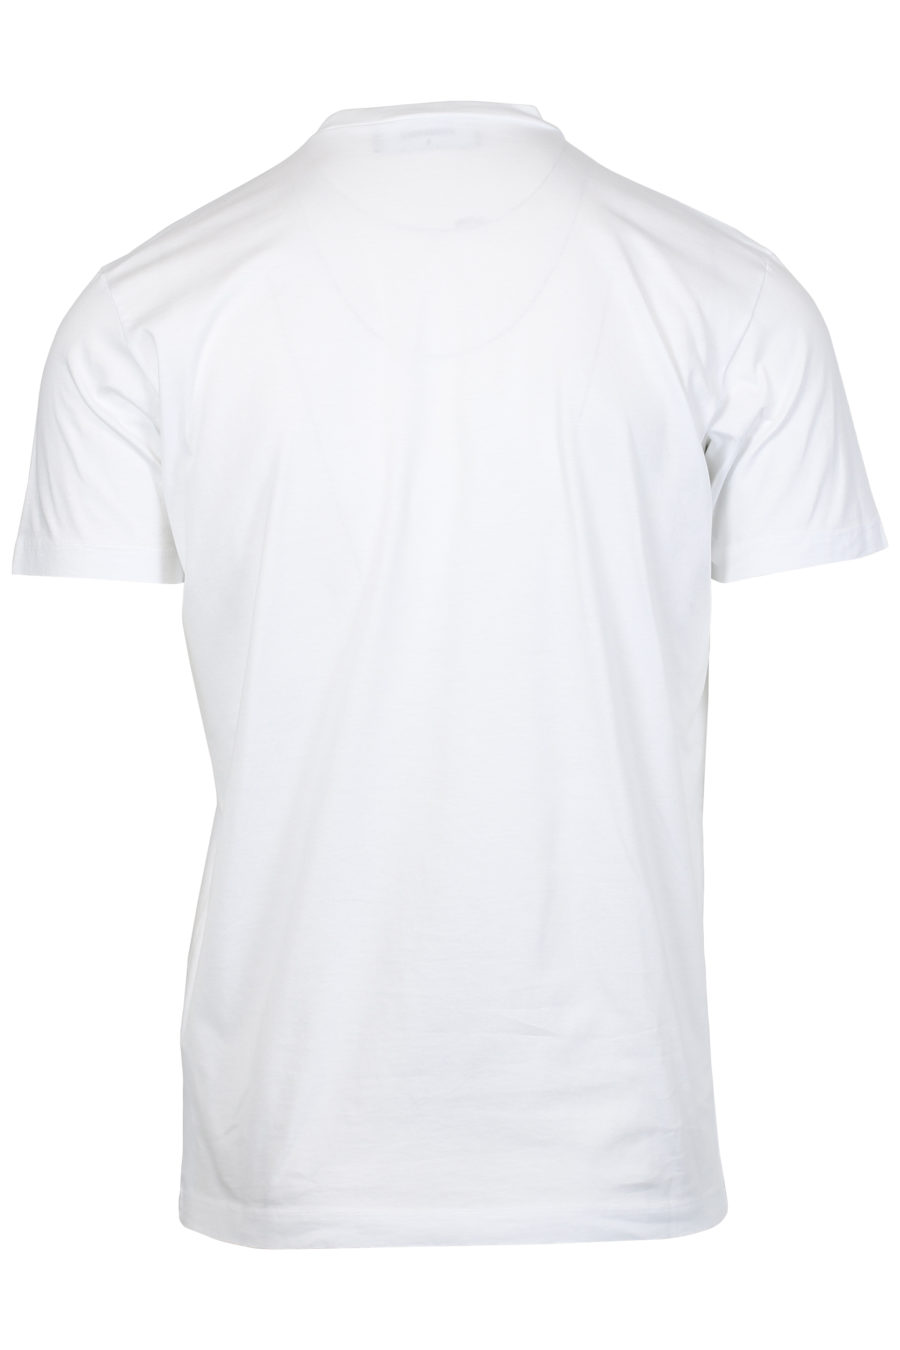 Camiseta blanca con estampado "D2 Brotherhood" - IMG 2403